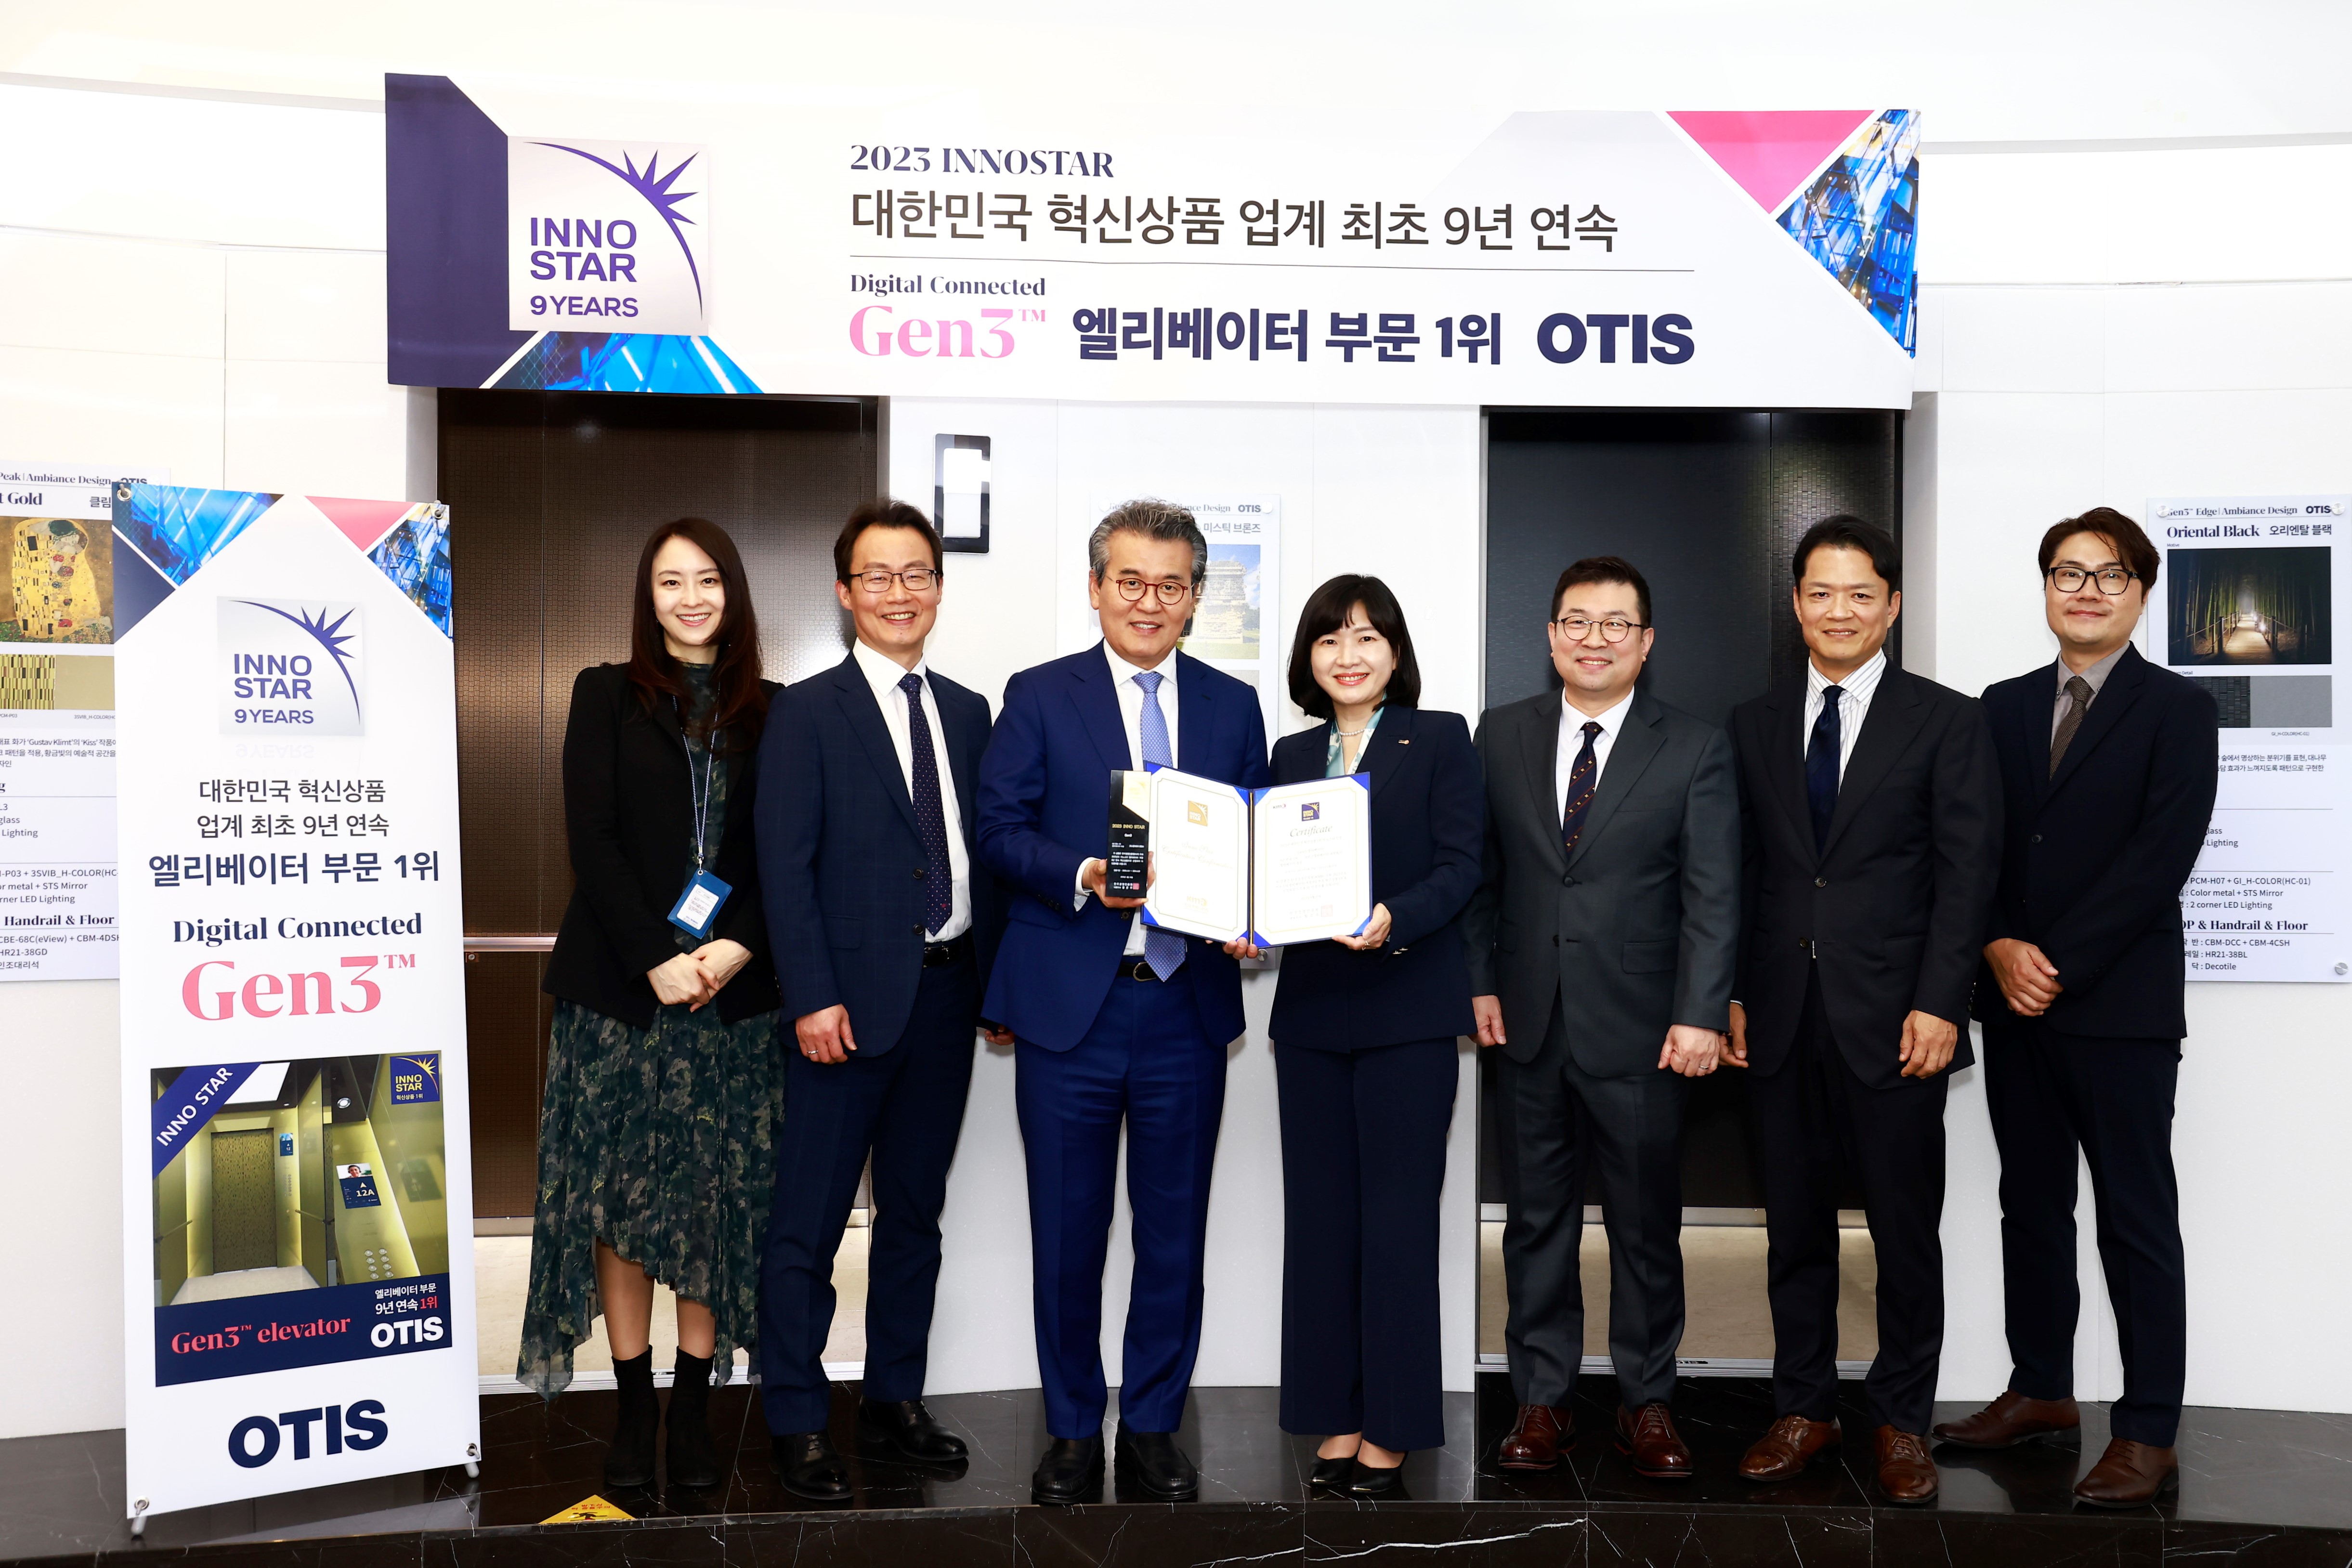 People at Otis Korea holding an InnoStar Certification for Gen3 elevator